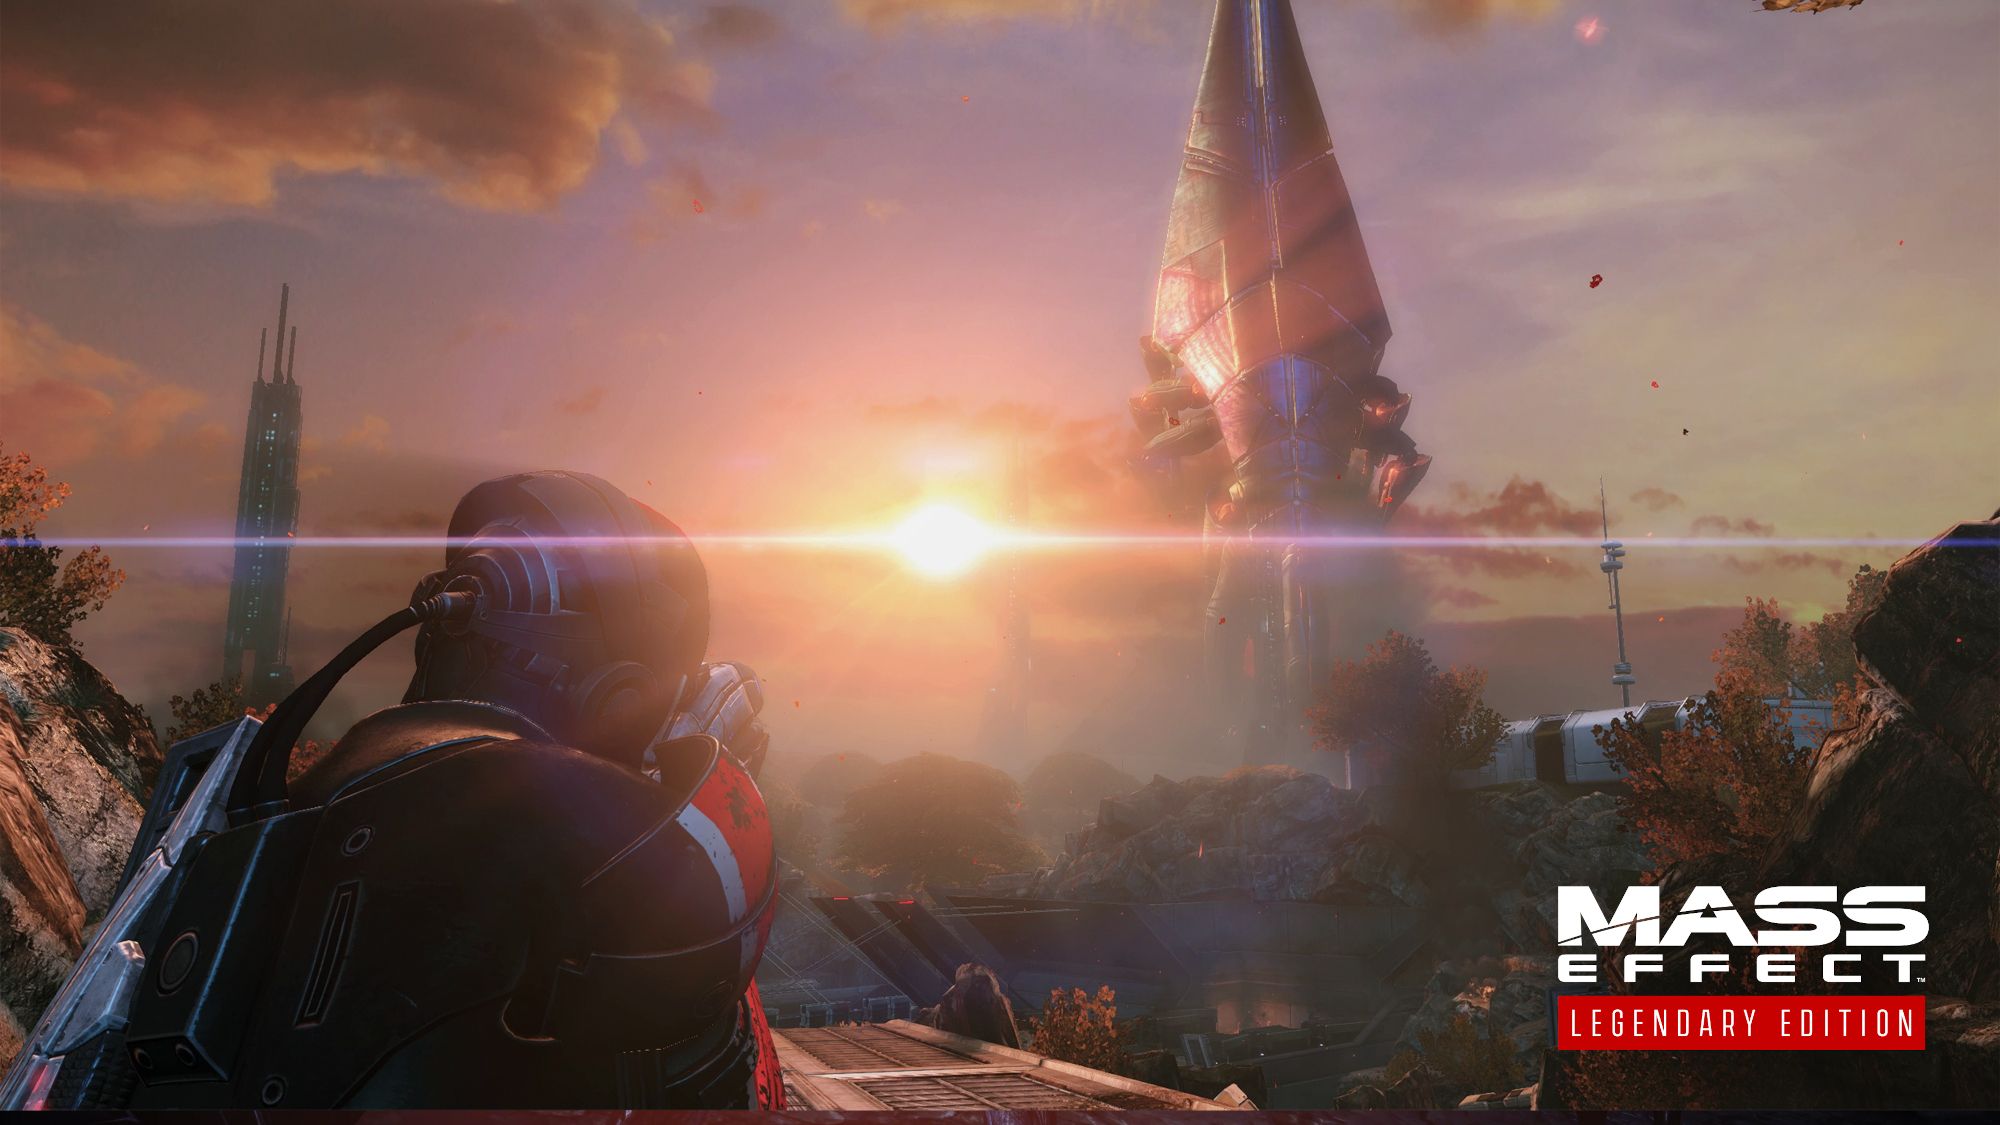 Eden Prime from Mass Effect